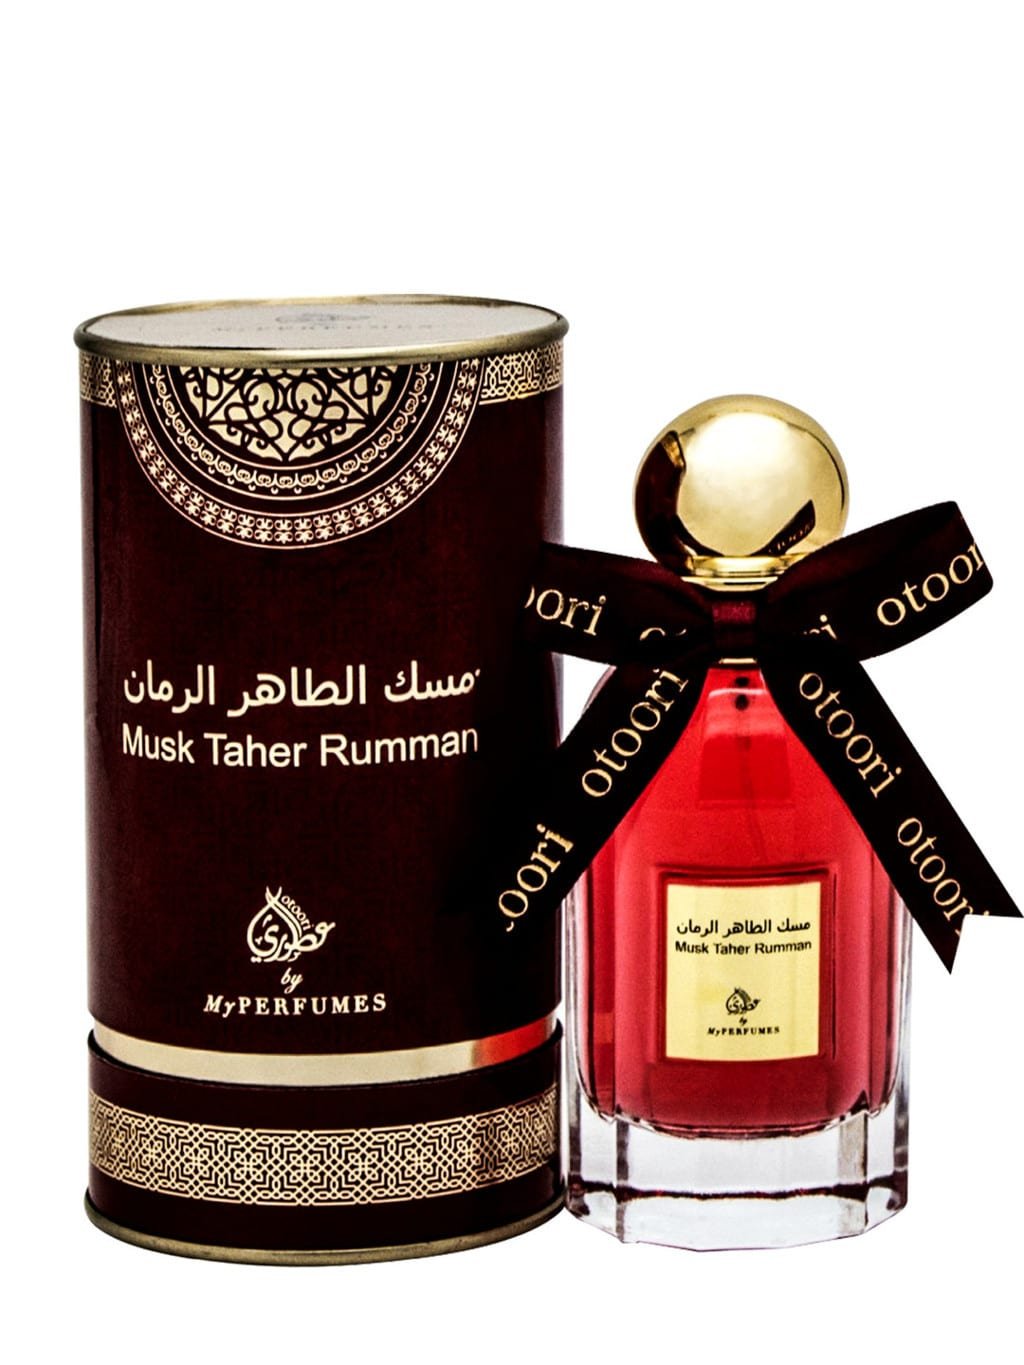 Otoori Musk Taher Rumman EDP Perfume 80ml